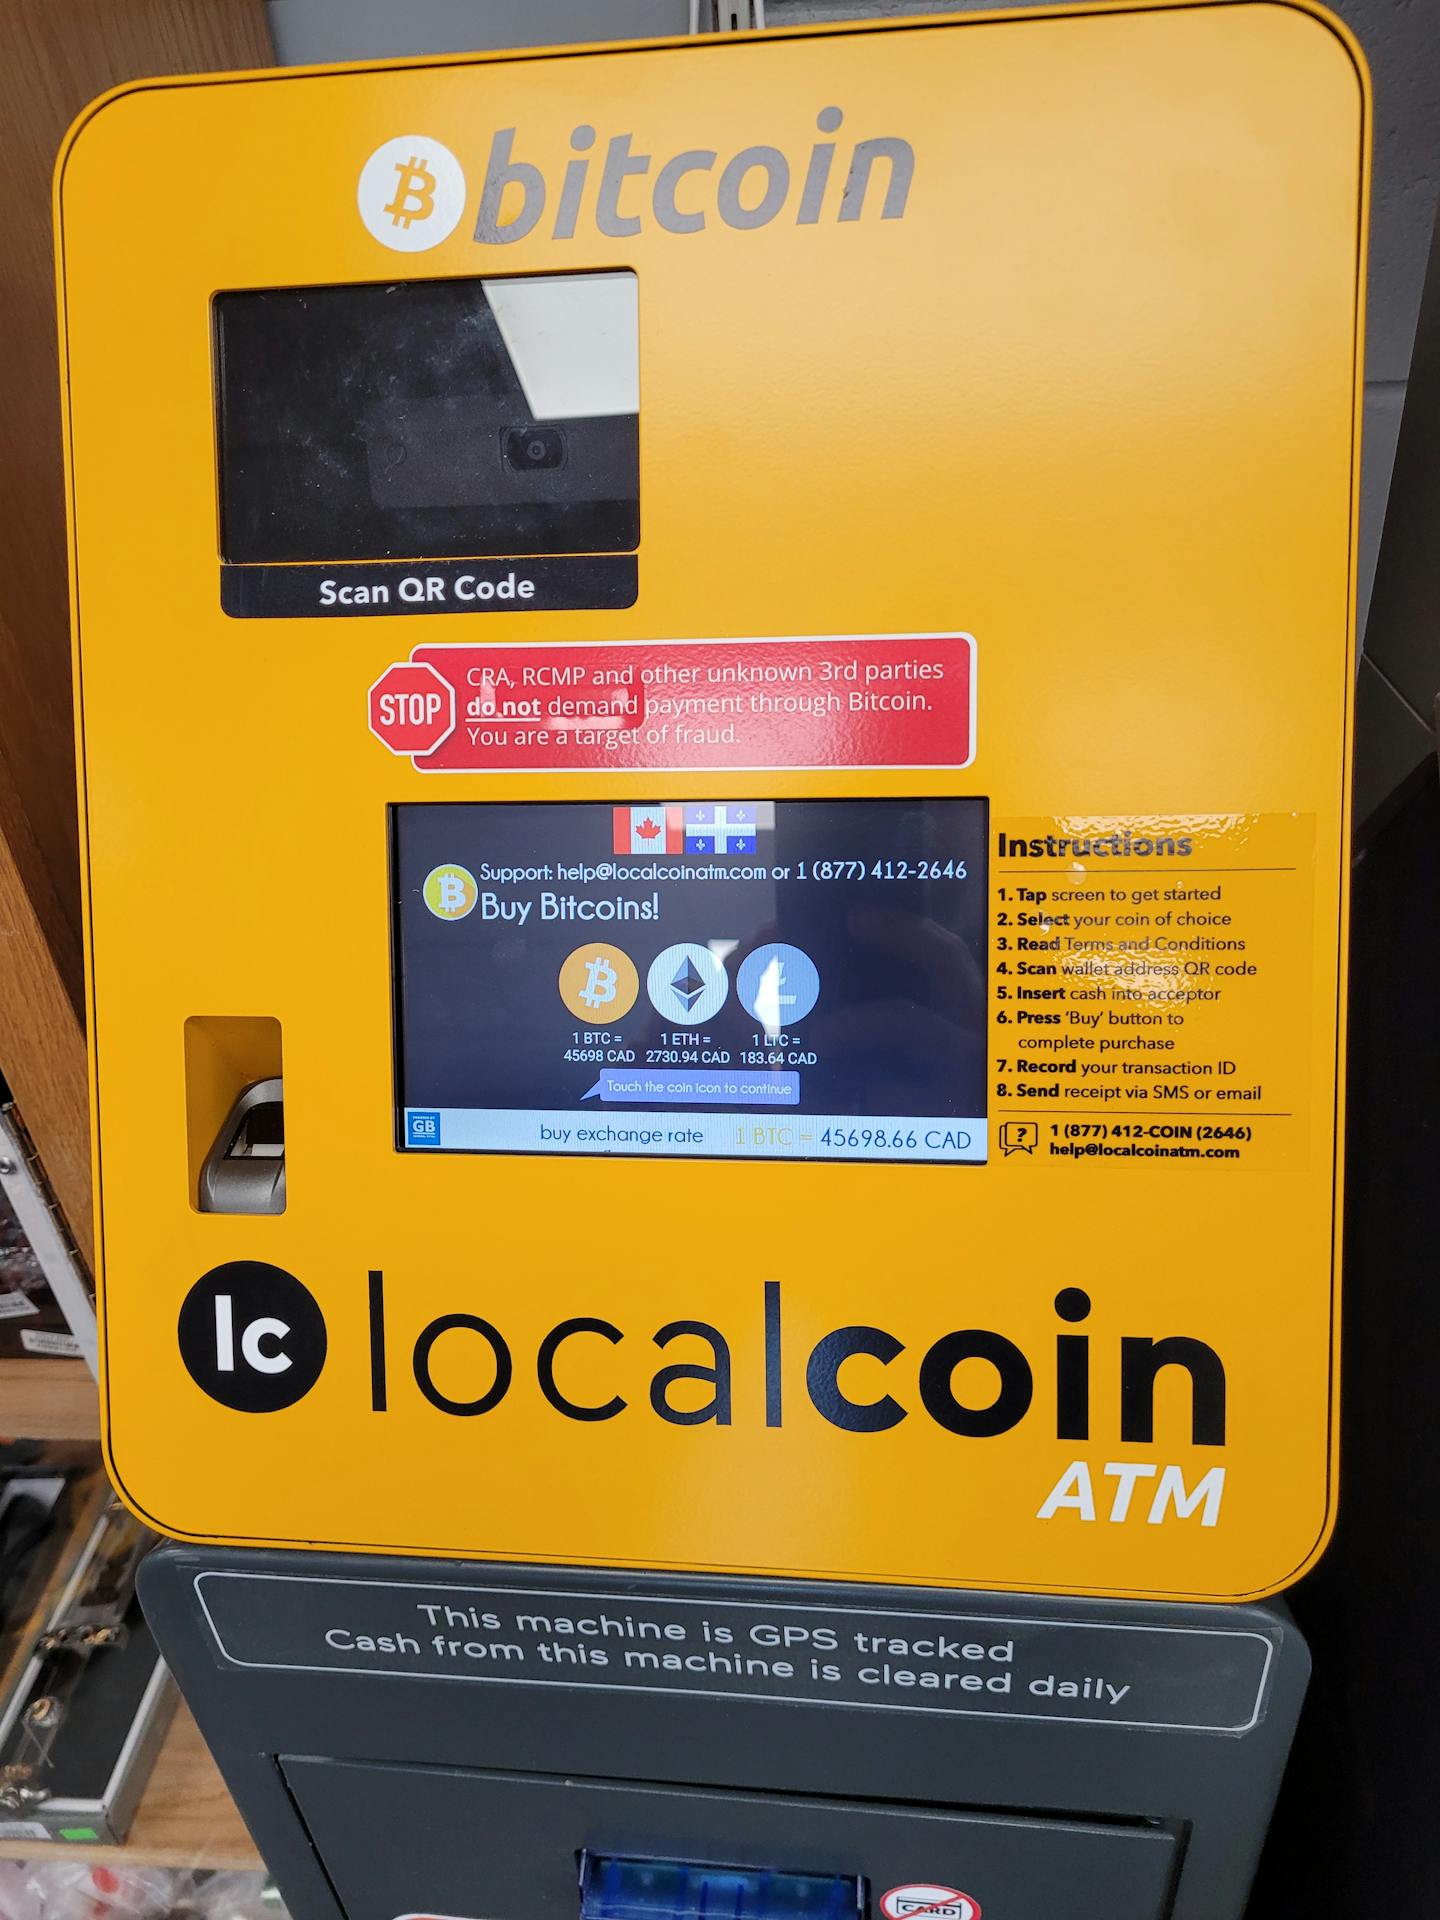 ATM Photo 1